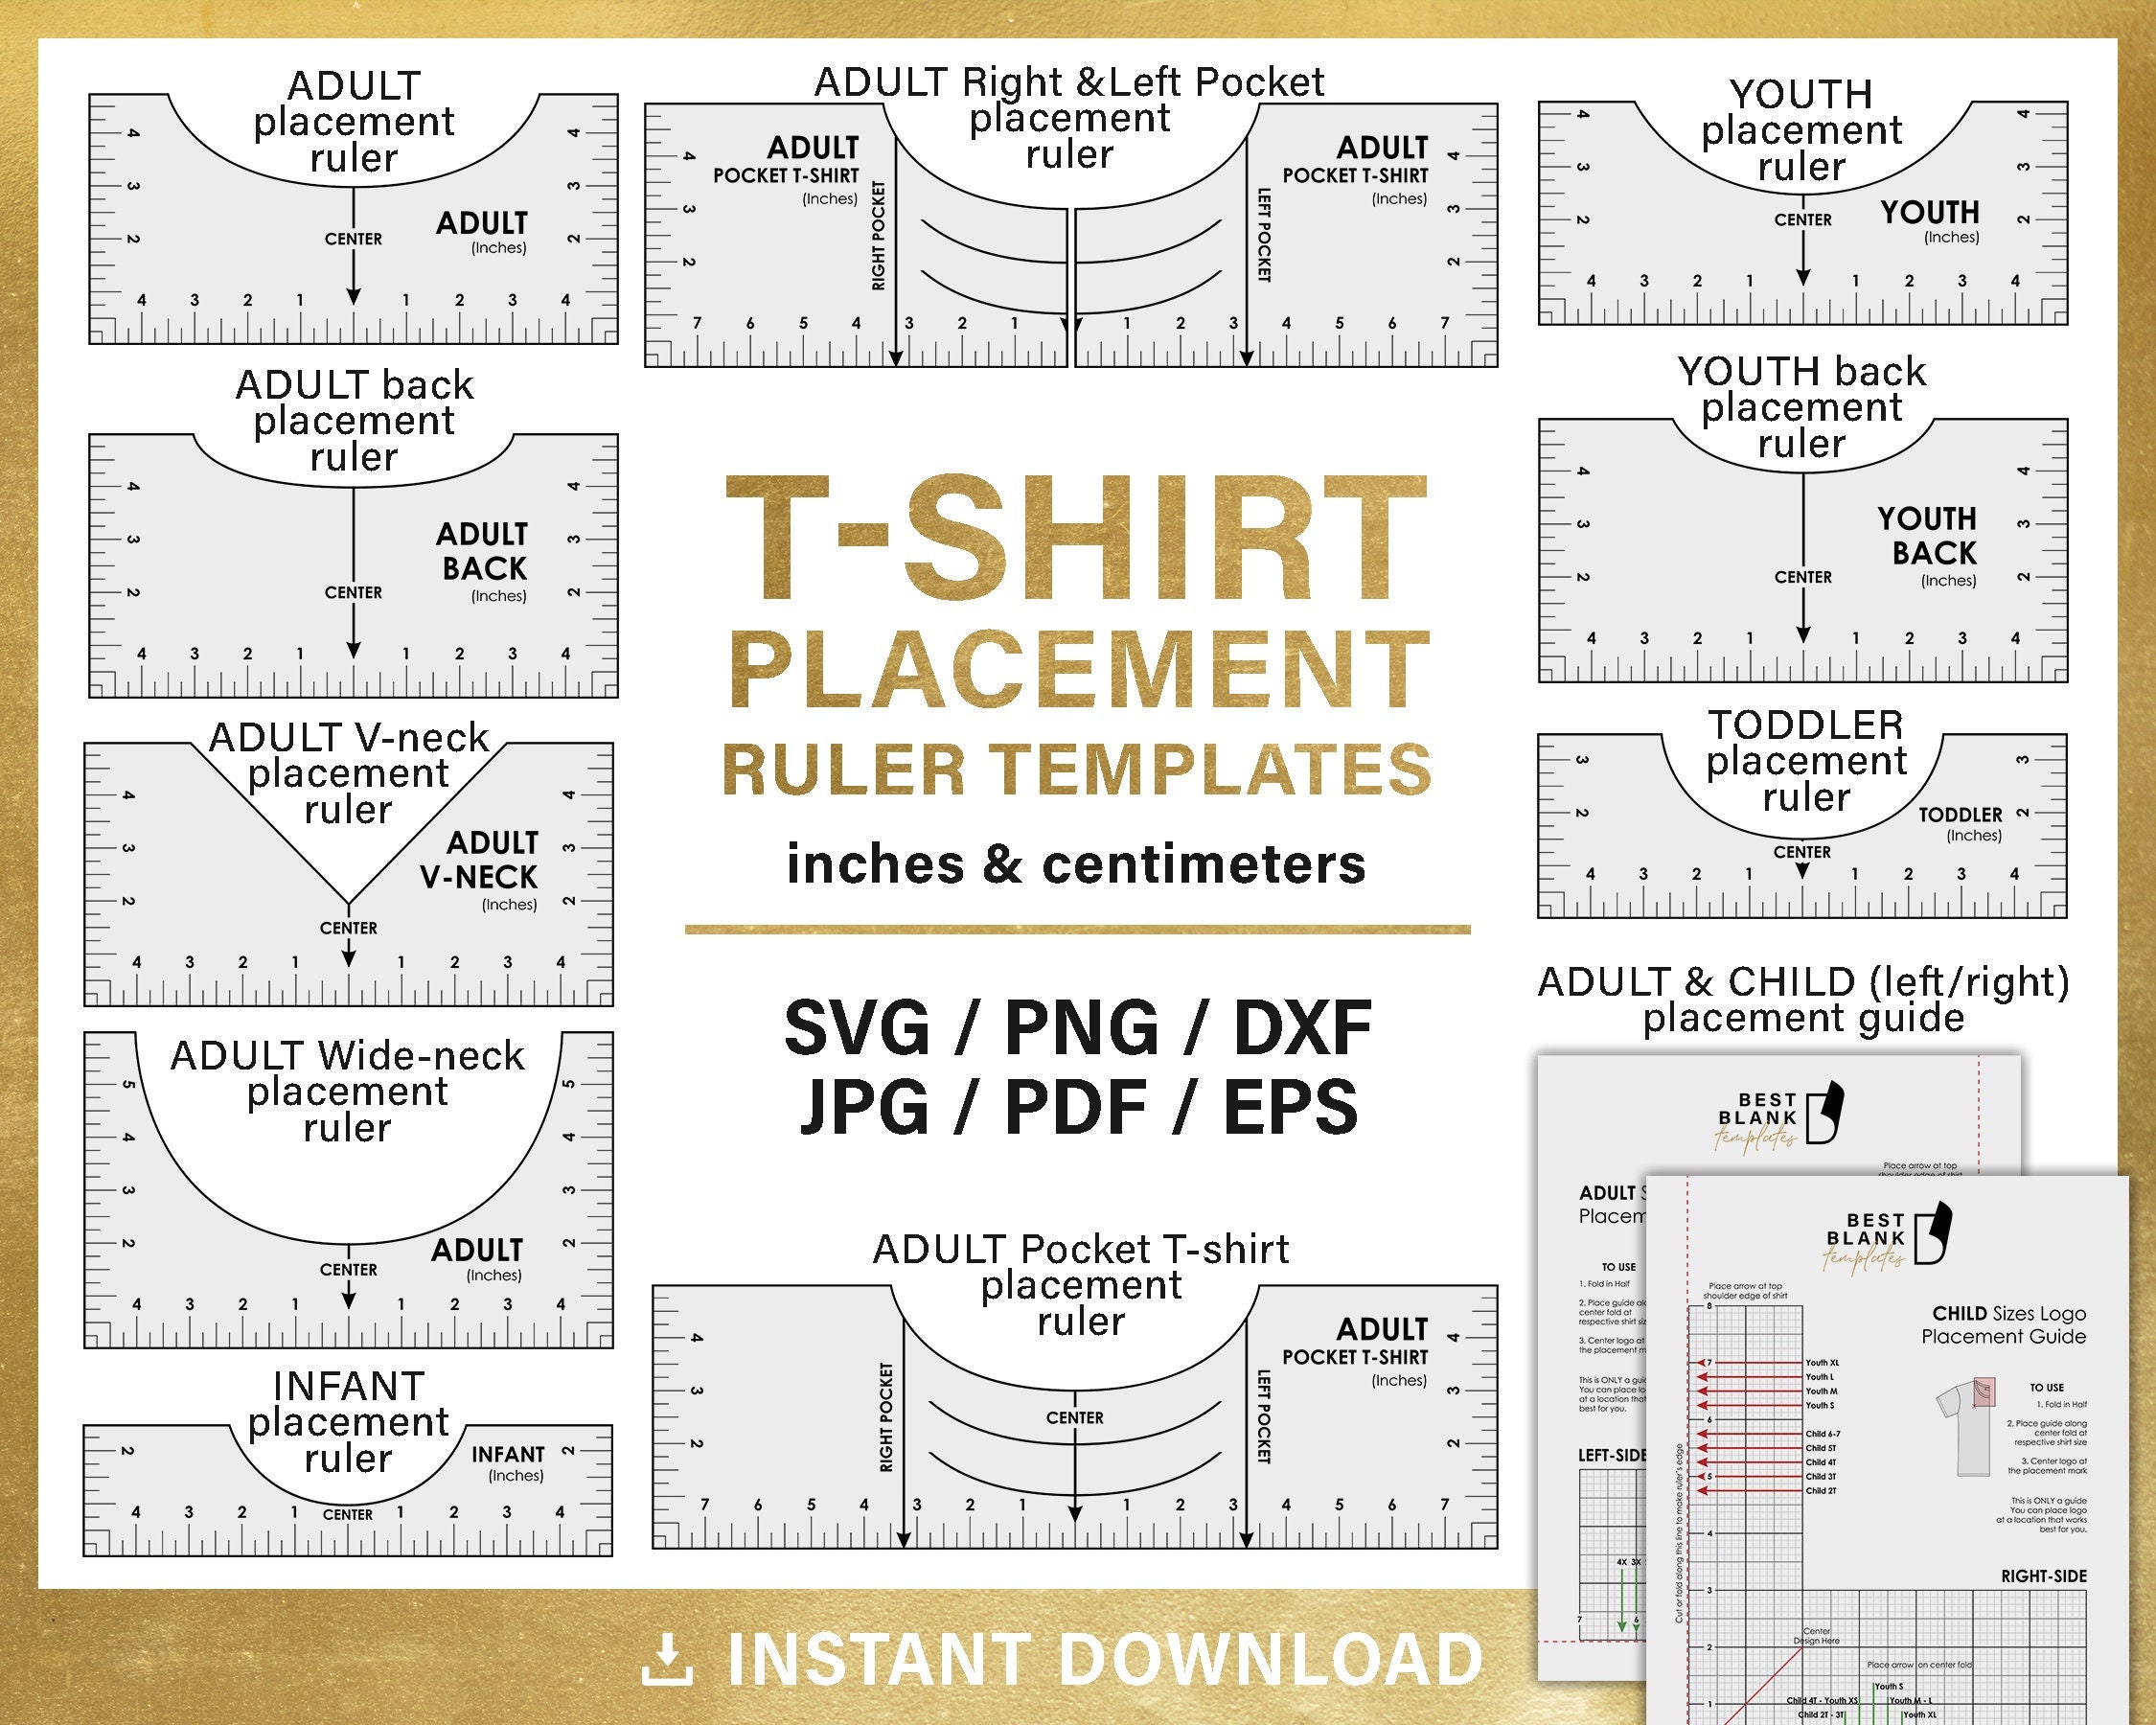 White Tshirt Ruler Guide for Vinyl Alignment for Custom Design Tshirt Alignment Ruler Loyewellr Tshirt Ruler Guide 4 Size T-Shirt Rulers and a Soft Measuring Tape for Adult Youth Toddler Infant 